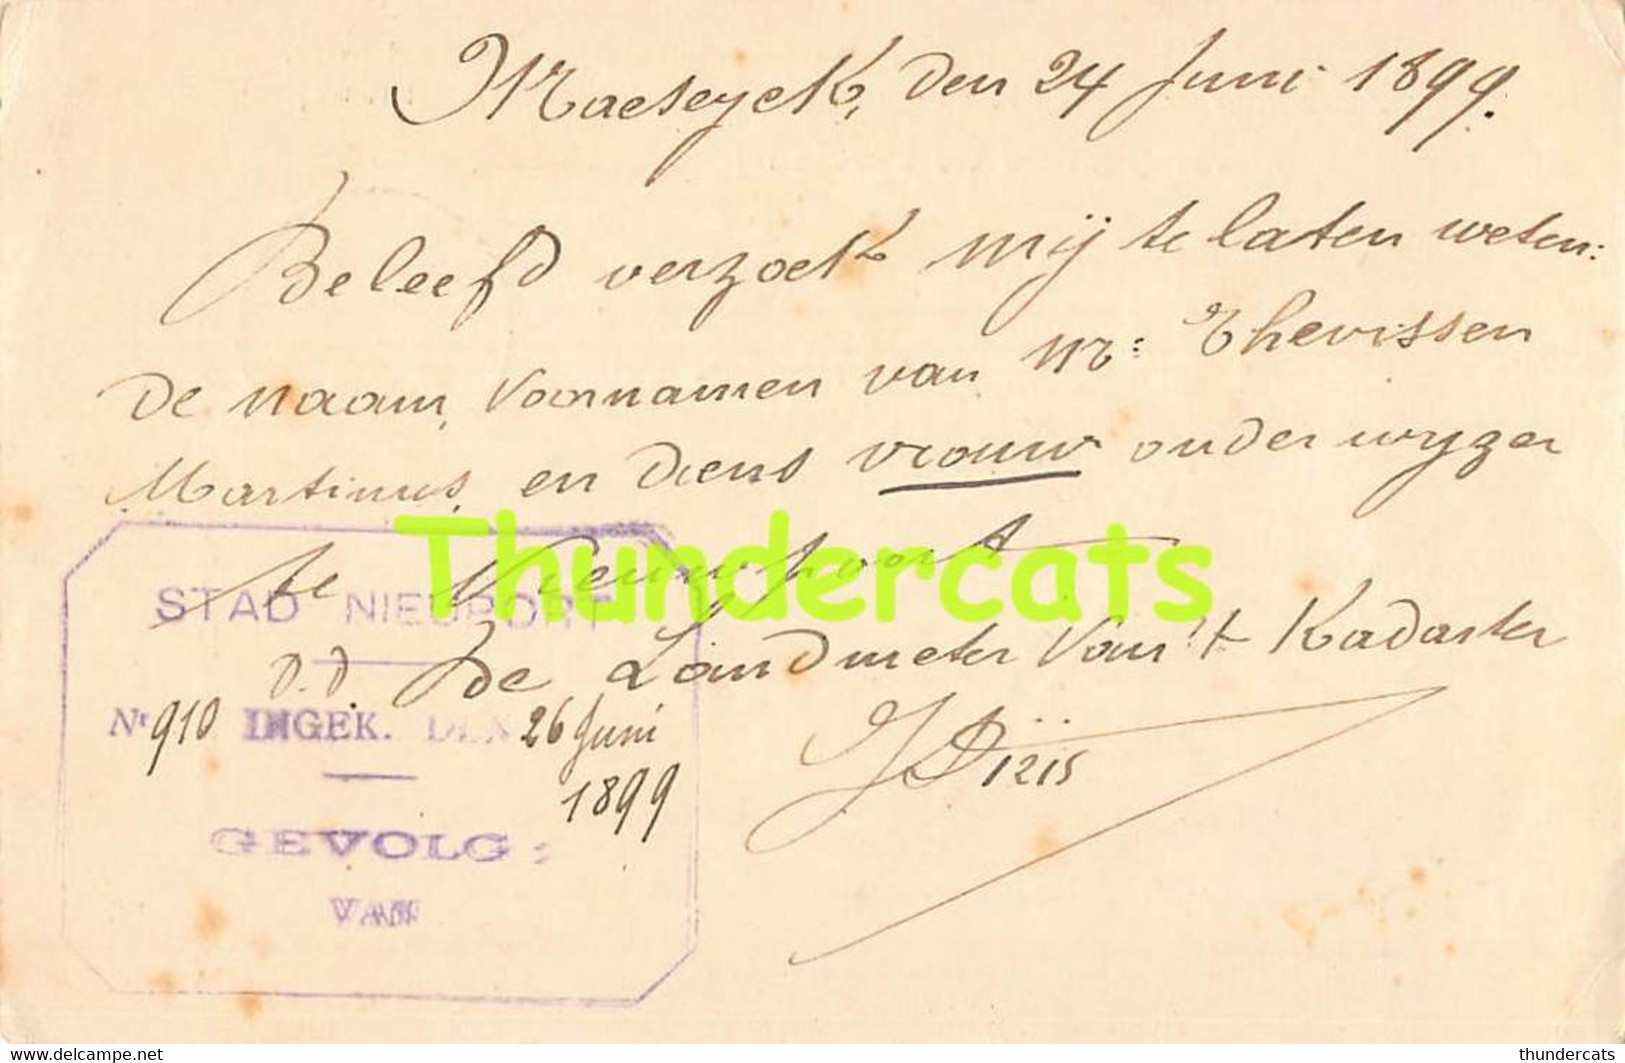 CPA 1899 CARTE POSTALE DE SEVICE DIENST BRIEFKAART 1899 LANKLAER NIEUWPOORT NIEUPORT - Marcas De La Armada